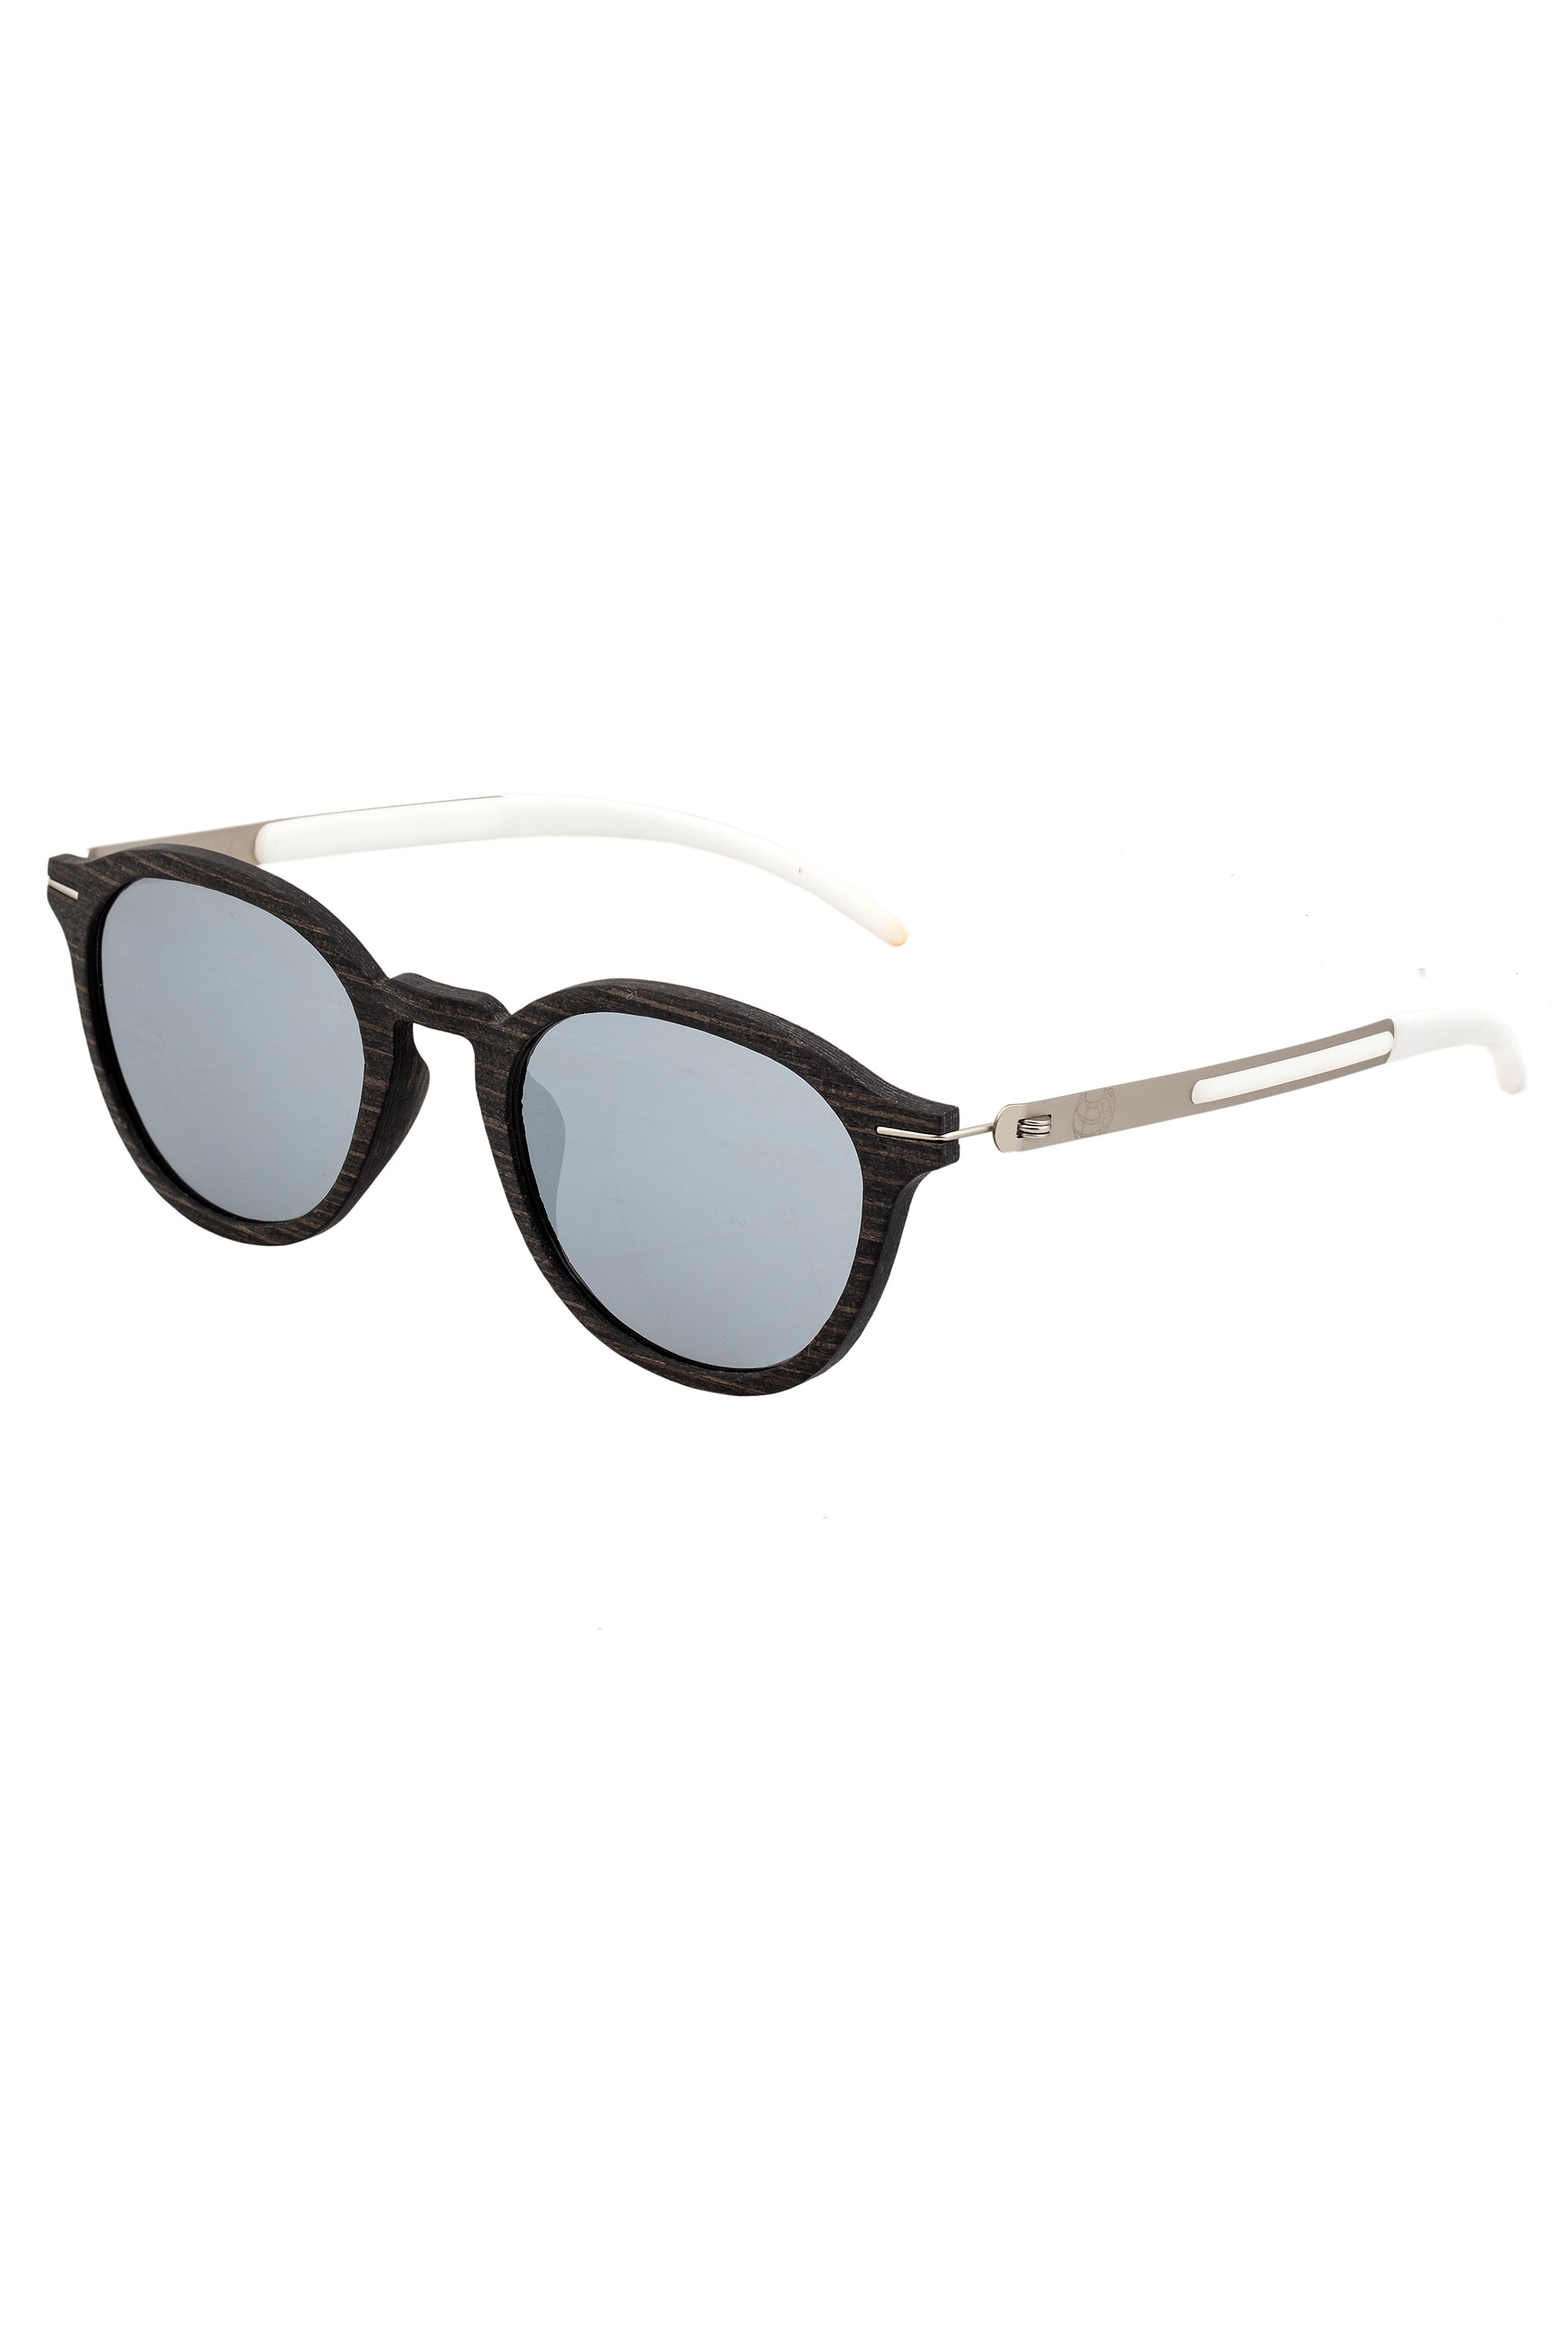 Sabal Polarized Sunglasses -